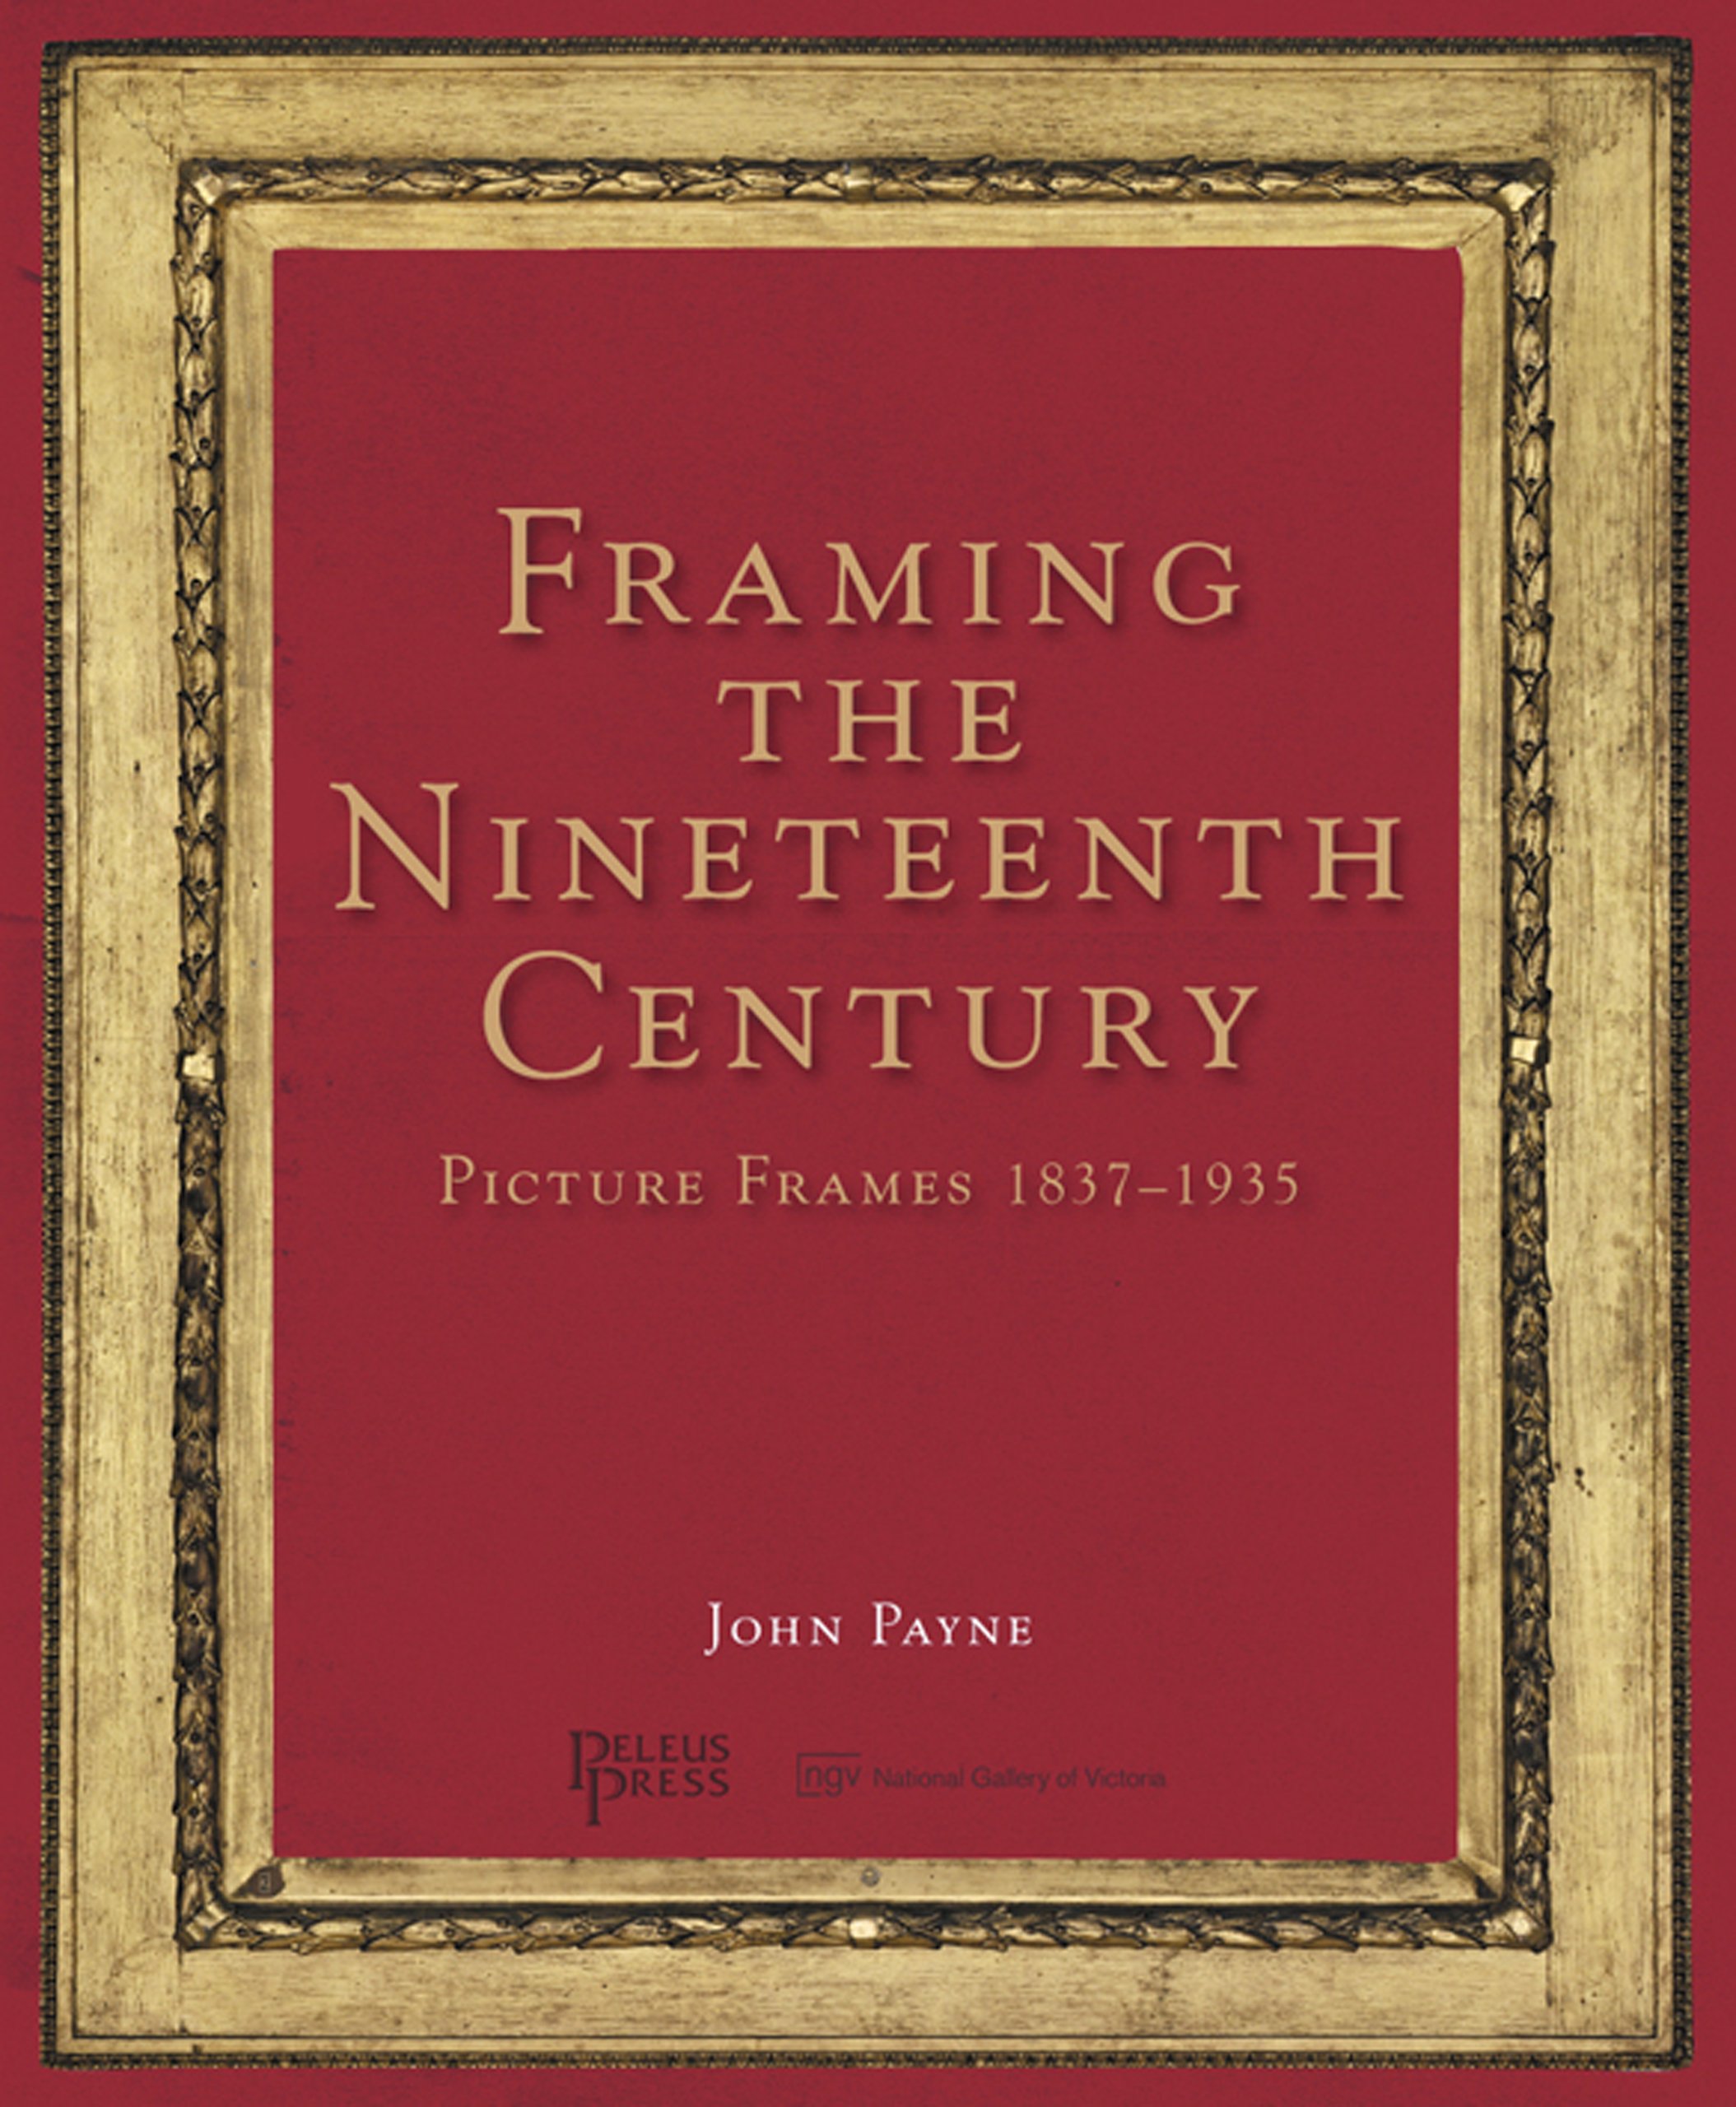 Framing the Nineteenth Century